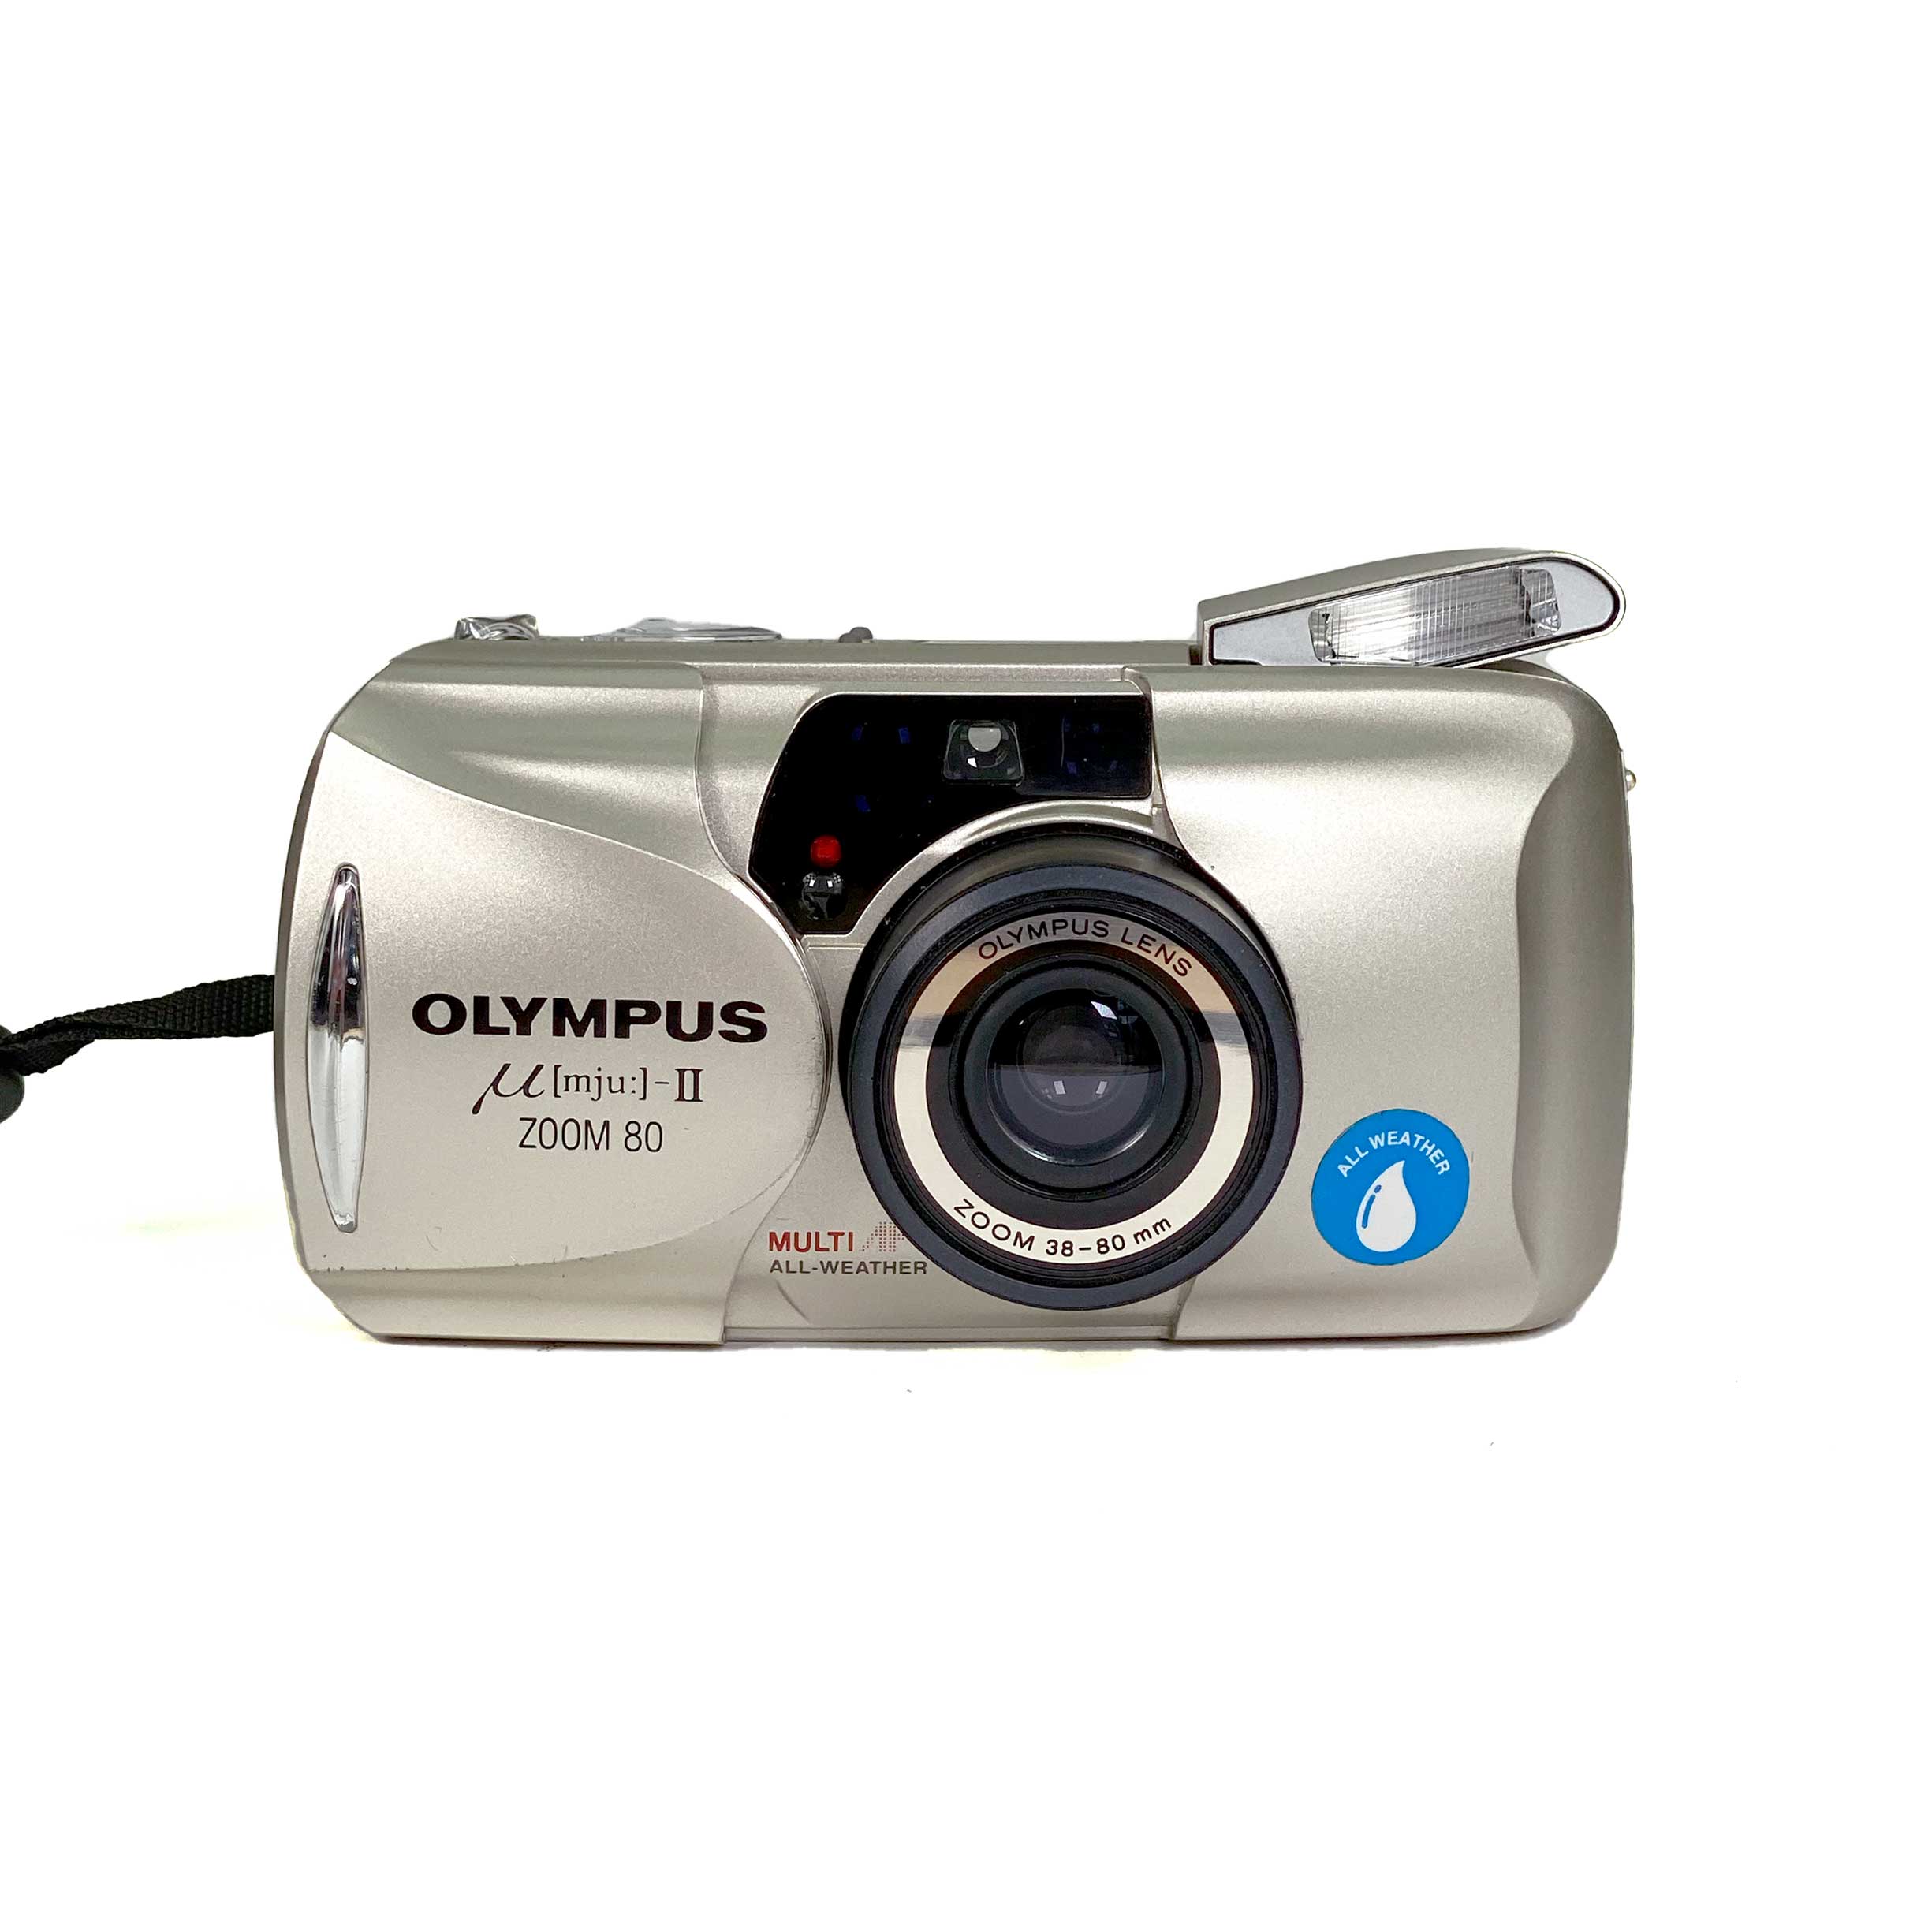 Afwijzen Acteur Artiest Olympus Mju II Zoom 80 Quartzdate – Retro Camera Shop